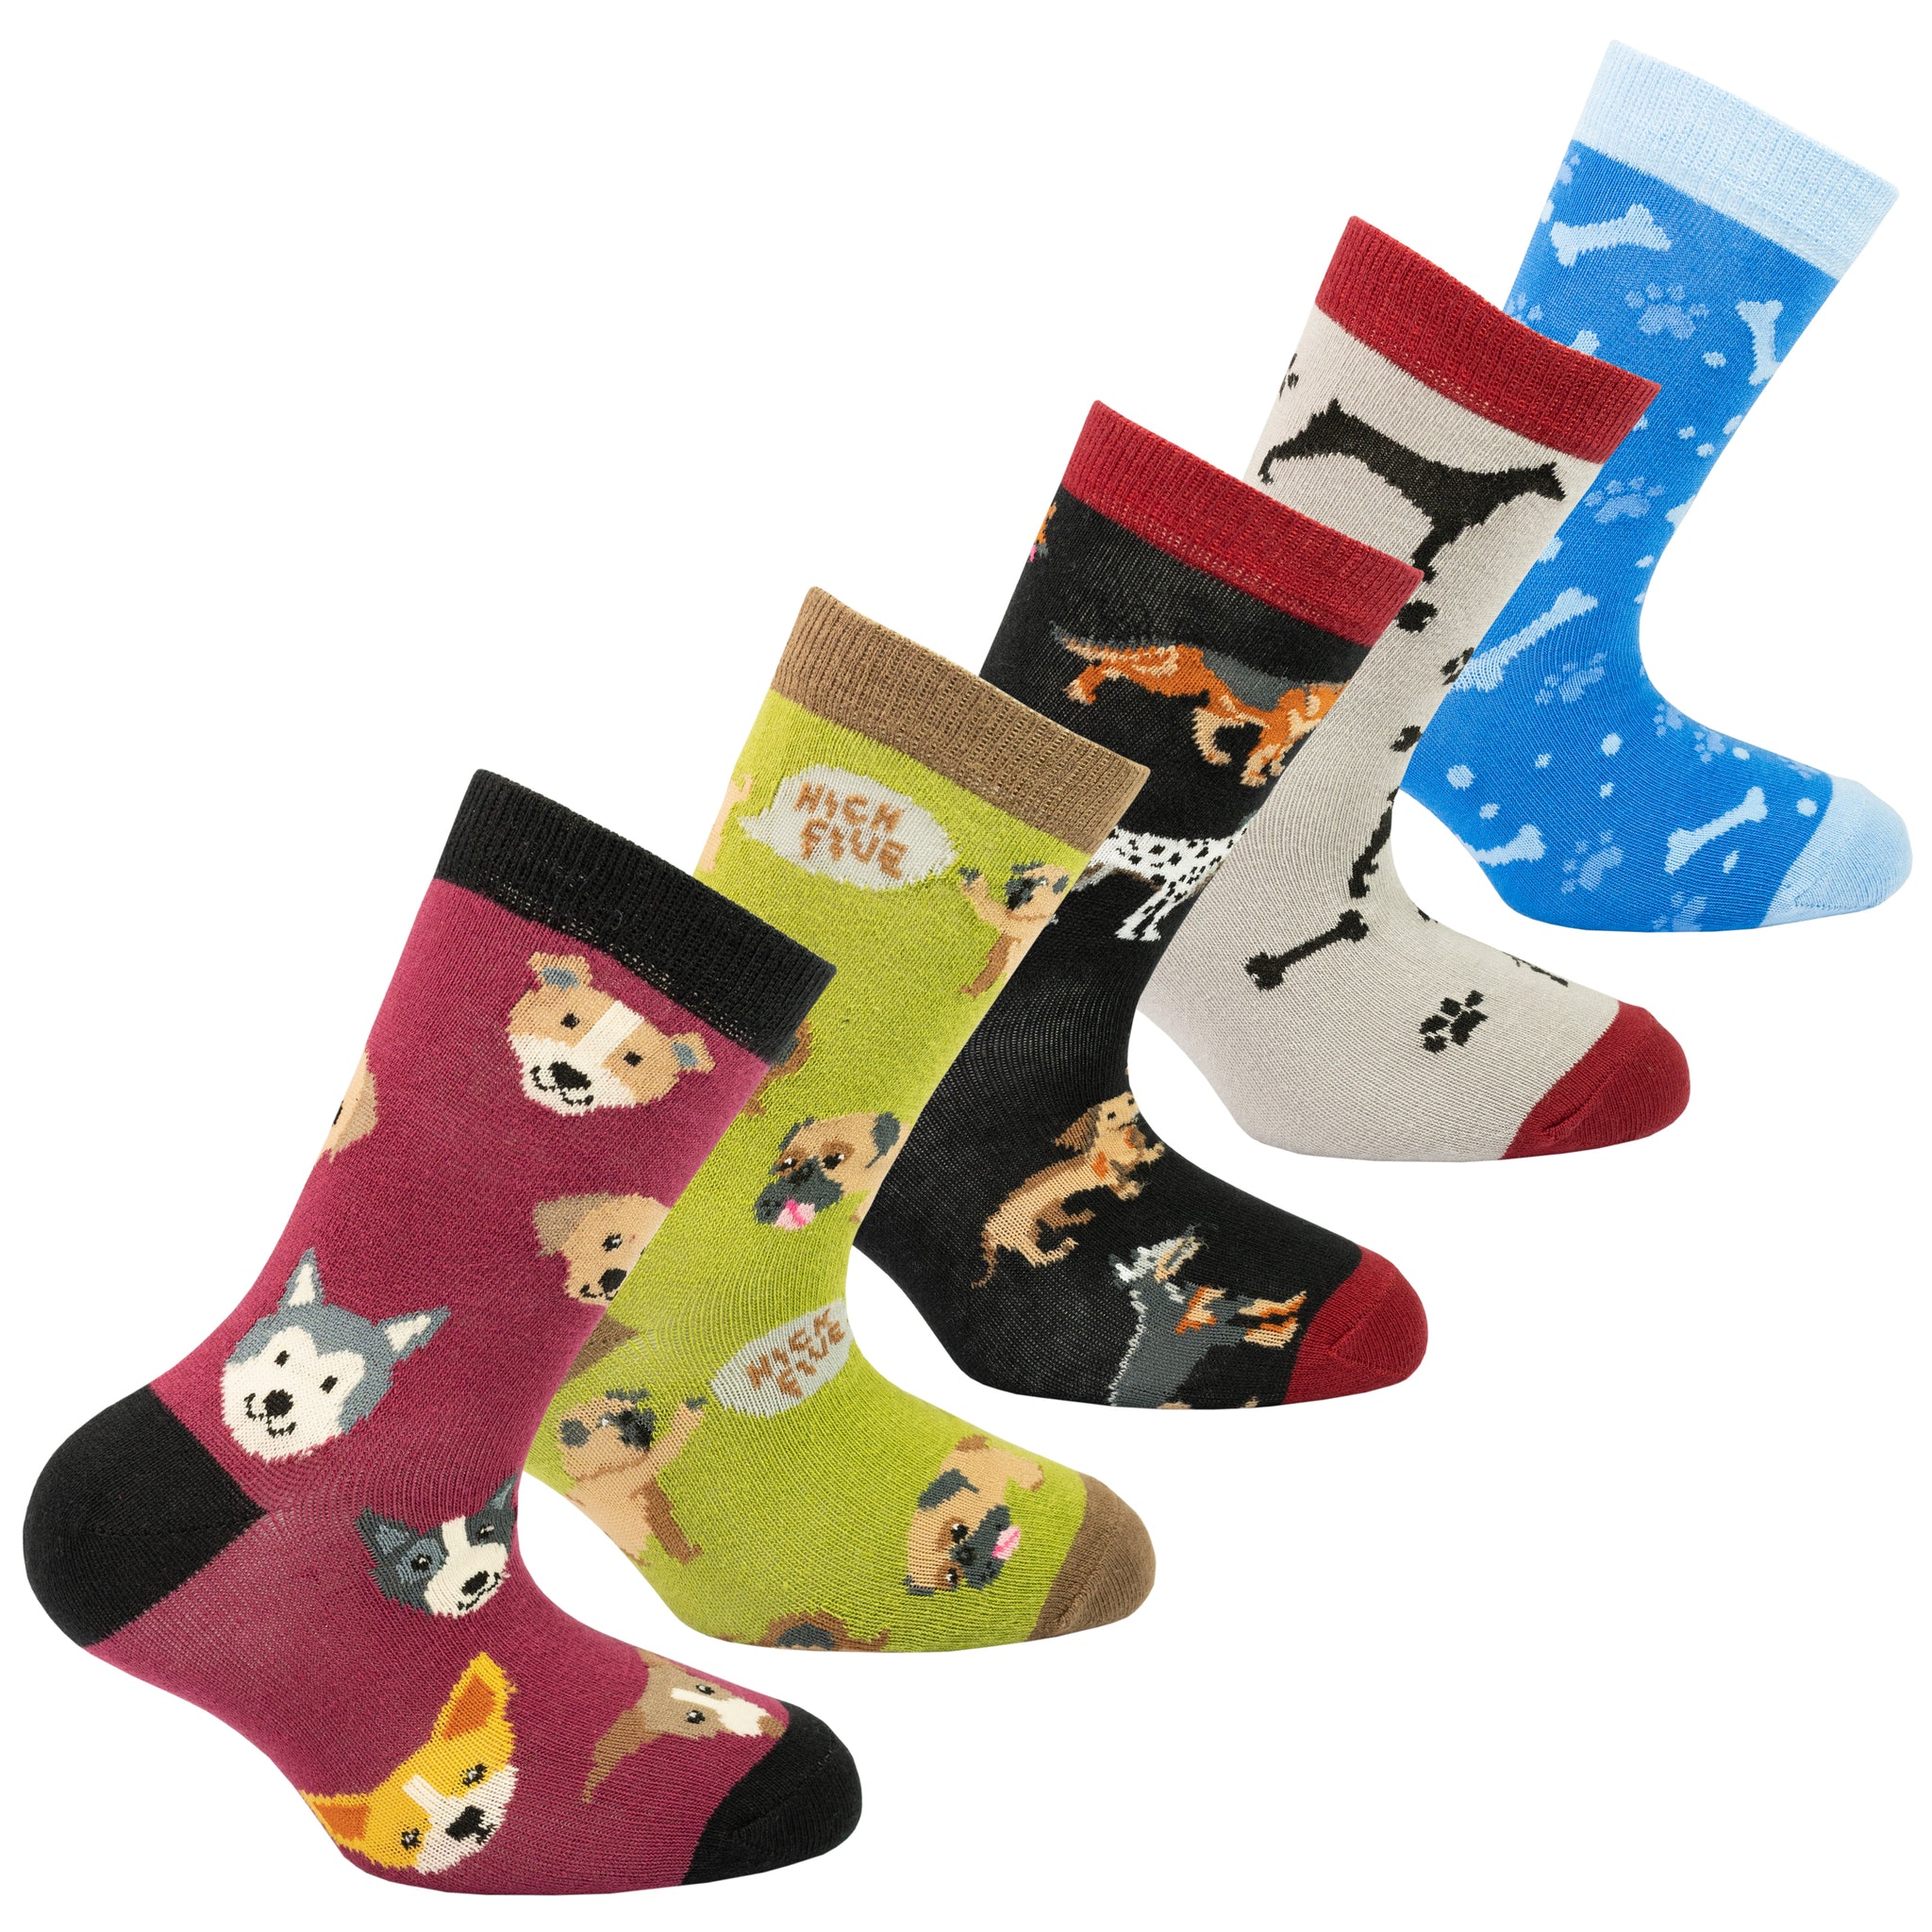 Kids Cute Dogs Socks 5-Pack colorful